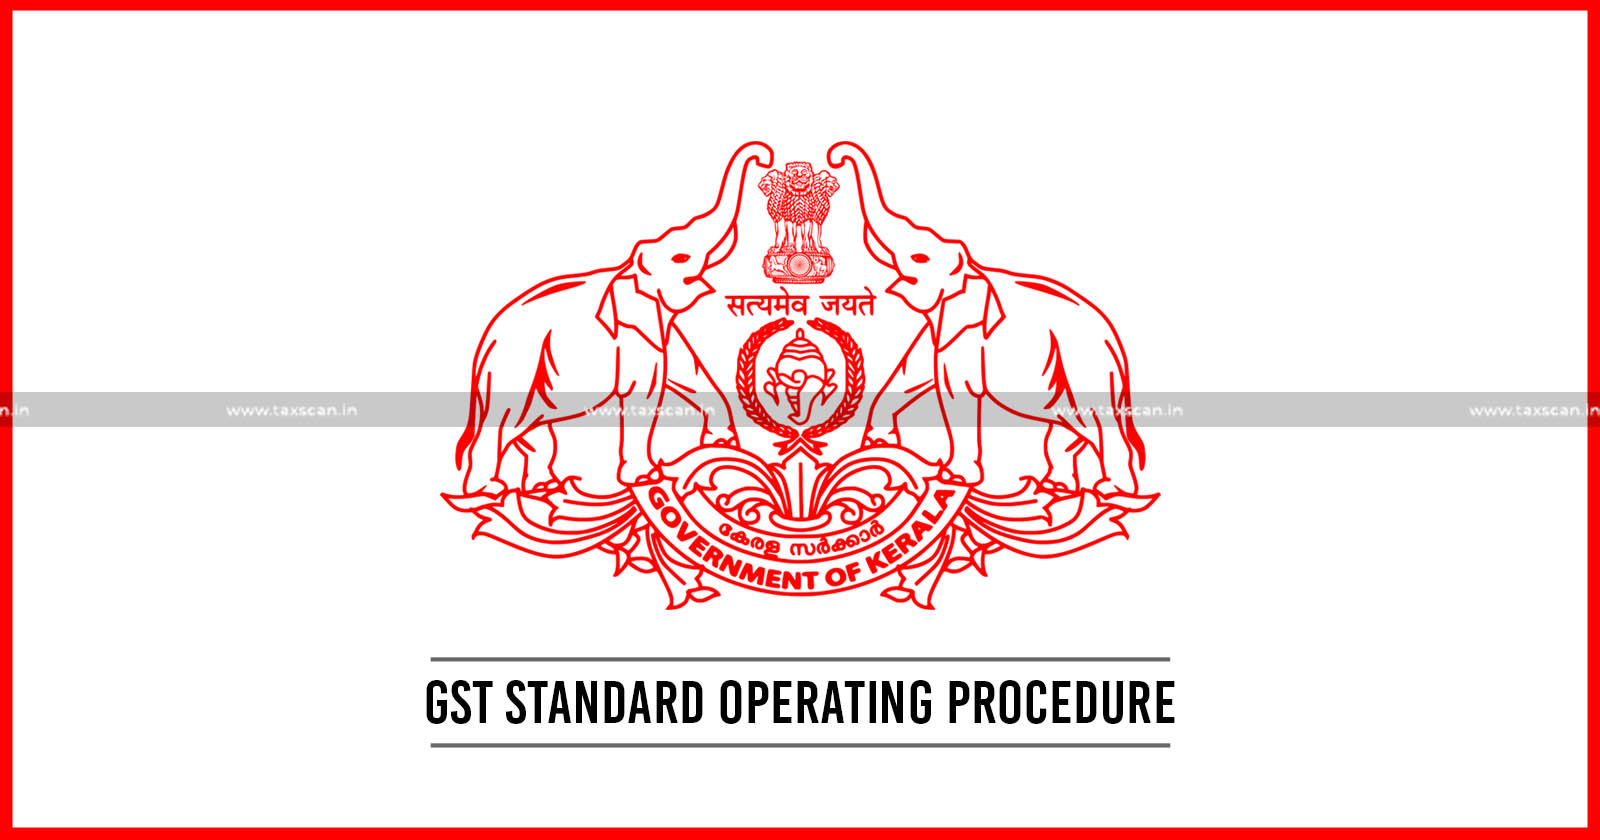 GST Update - GST - Kerala GST Dept issues SOP - Kerala GST Dept - SOP - Monitoring Ineligible IGST ITC Reversal - IGST - ITC - IGST ITC Reversal by Taxpayers in GSTR-3B - GSTR-3B - GST Dept - Taxscan